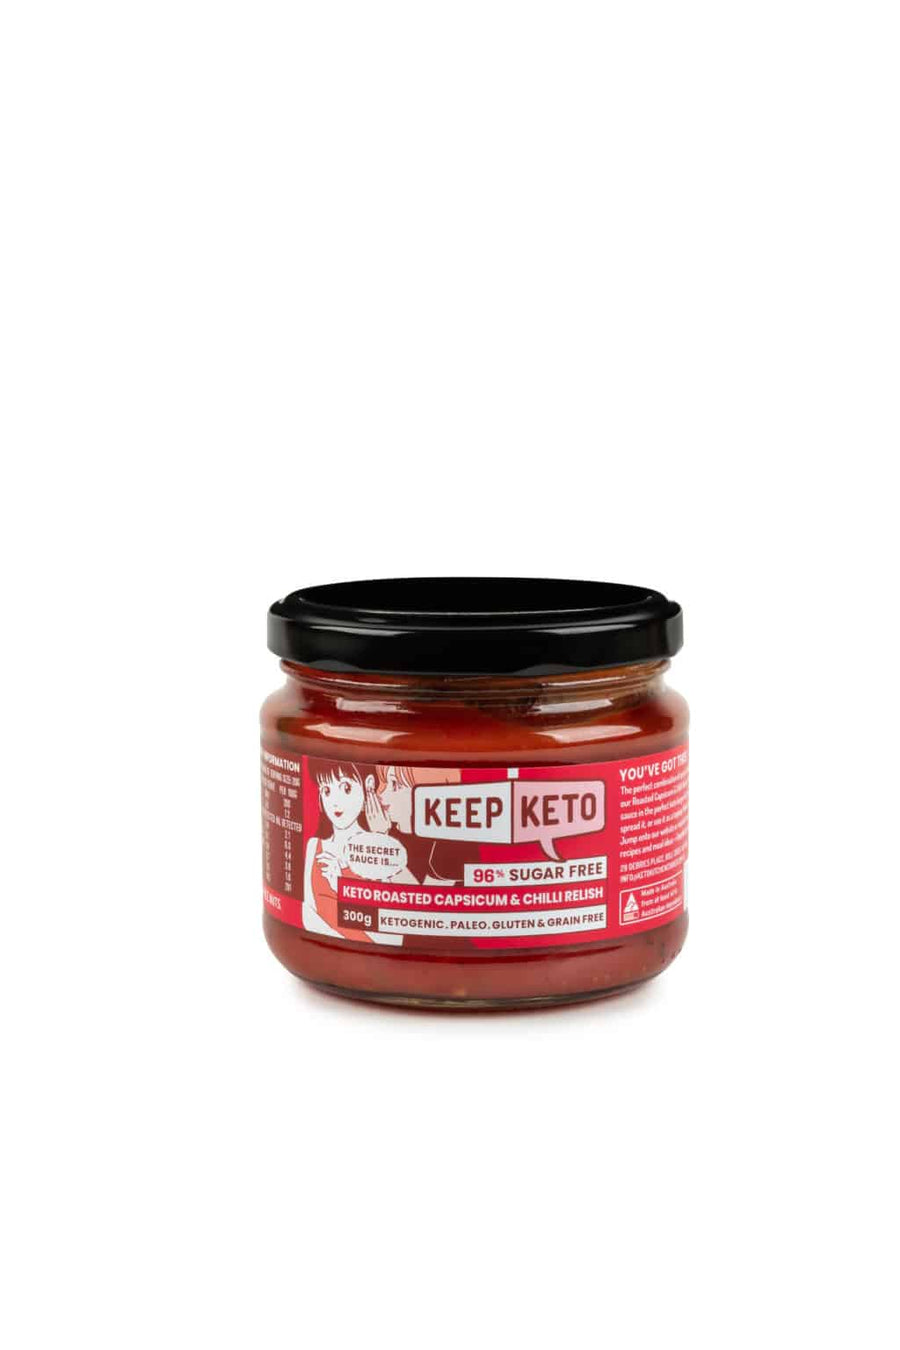 Keto Roasted Capsicum and Chilli Relish - Yo Keto